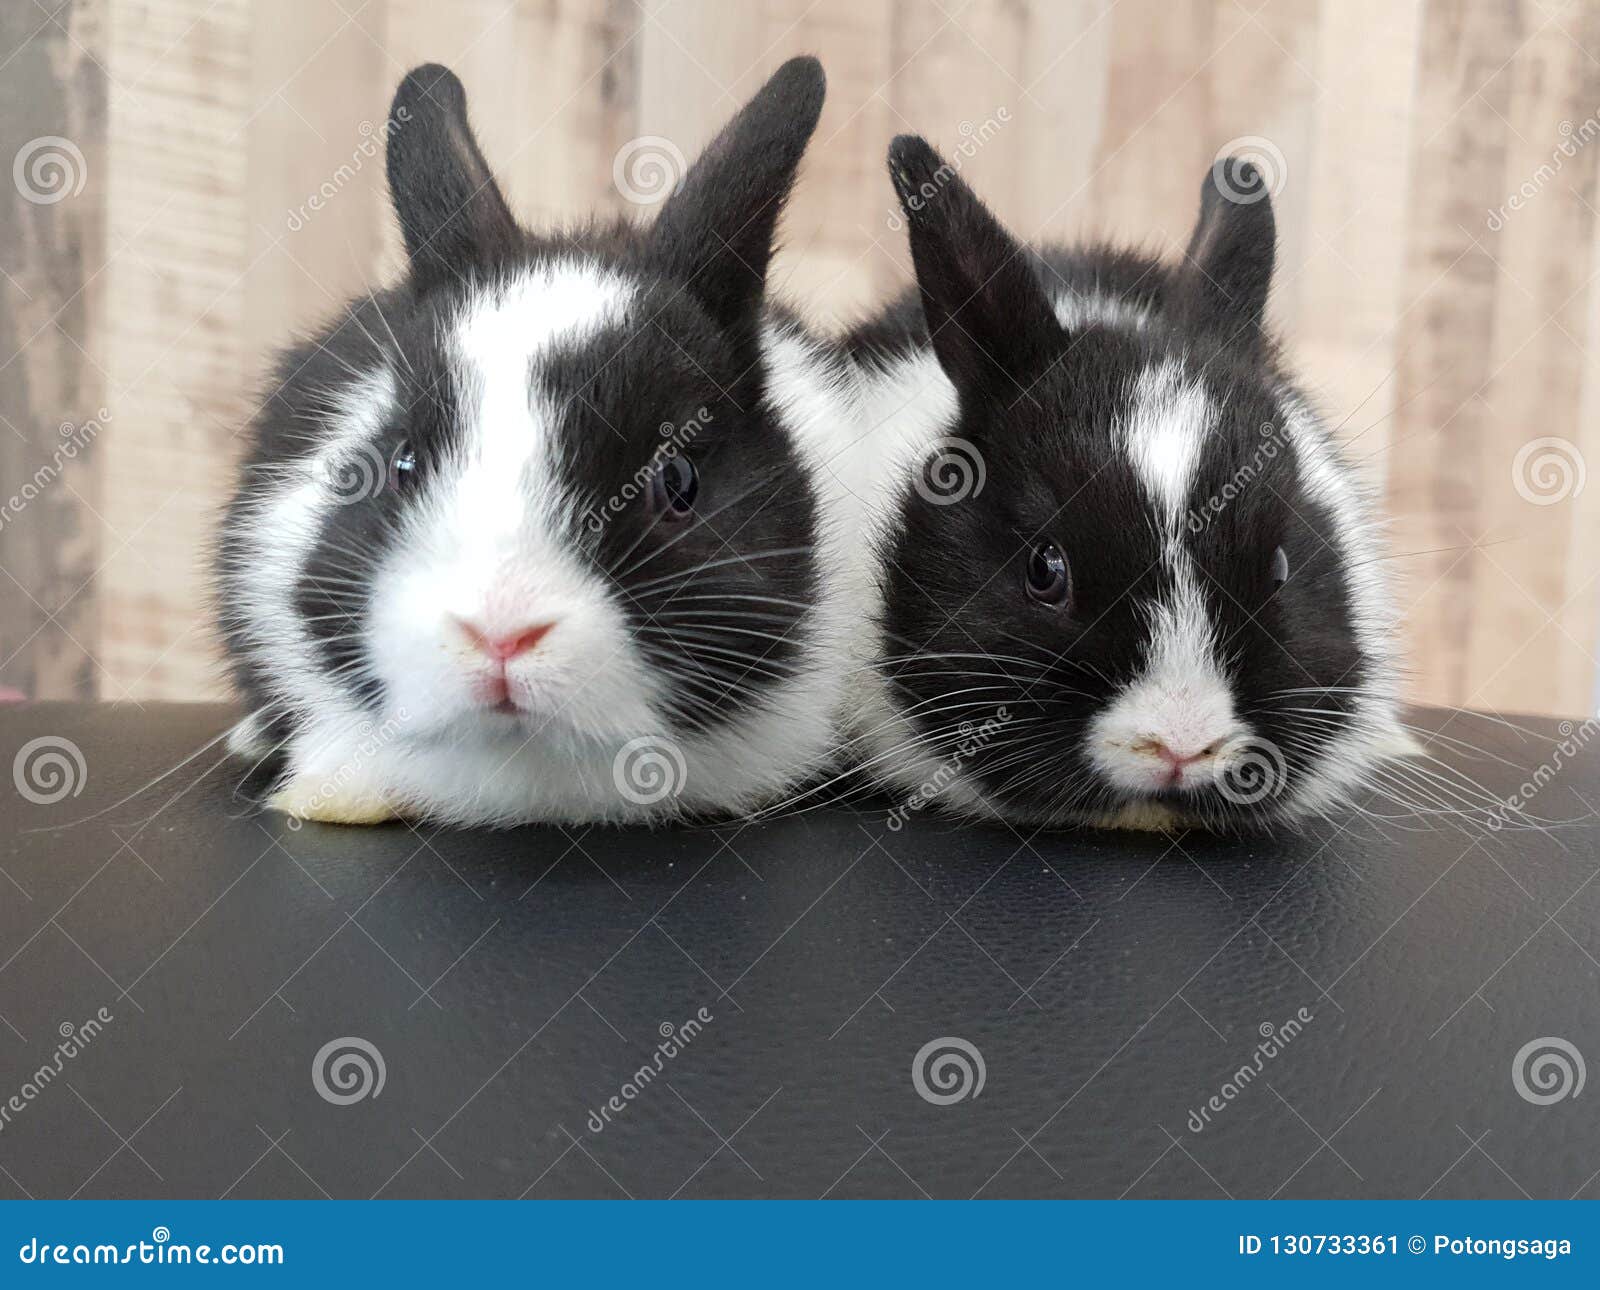 black and white dwarf bunny